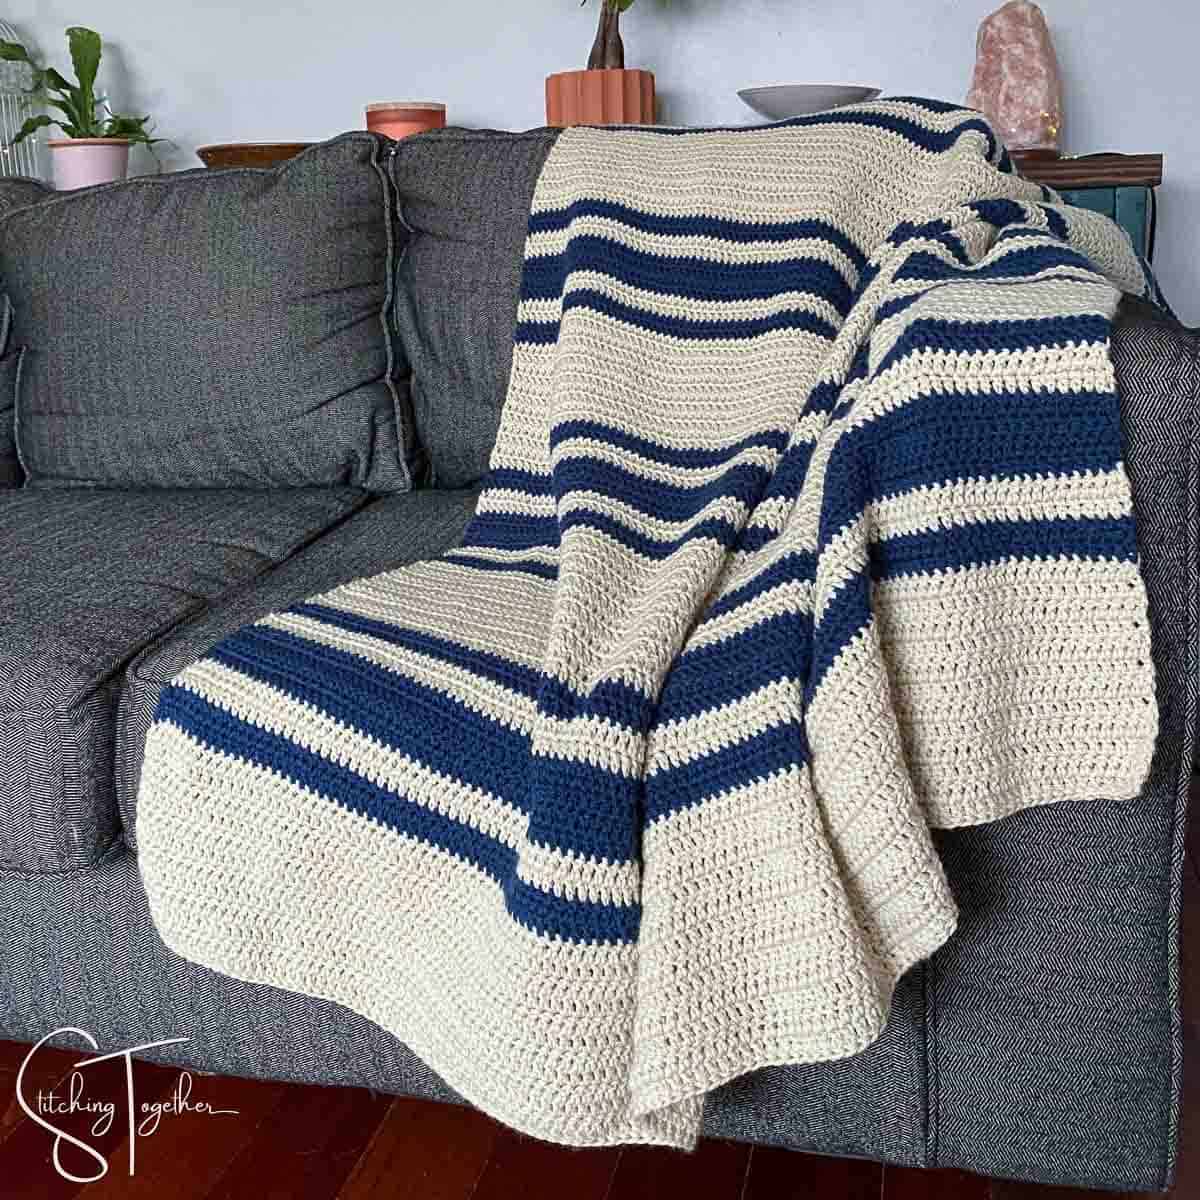 double crochet stitch blanket